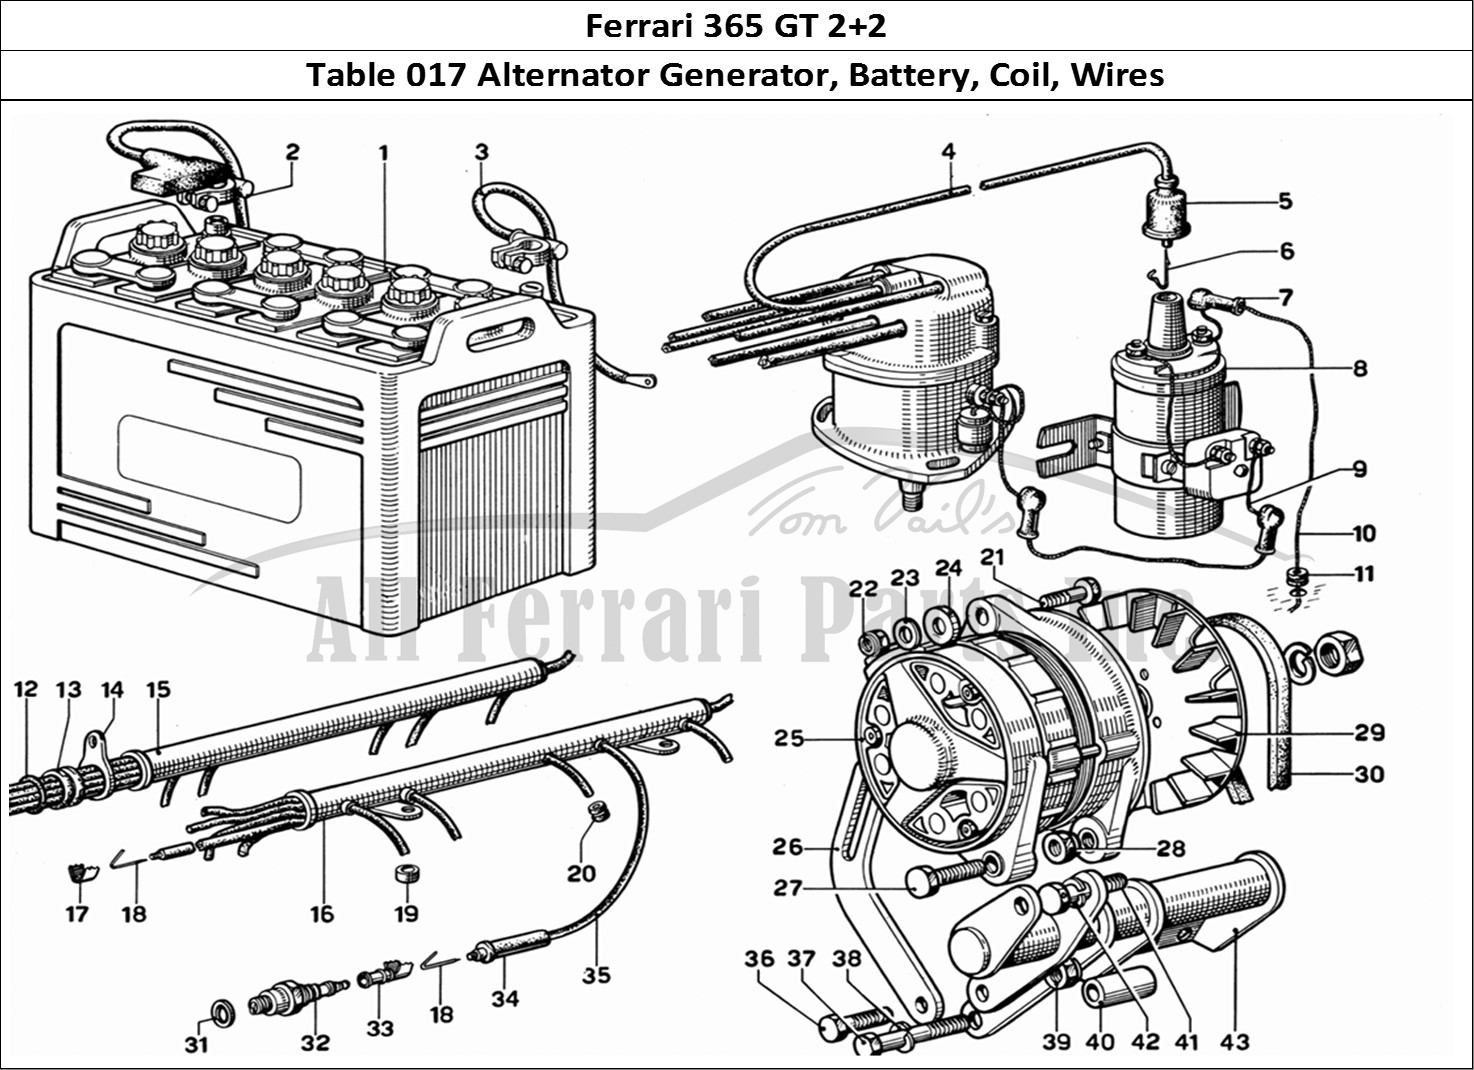 Ferrari Parts Ferrari 365 GT 2+2 (Mechanical) Page 017 Generator and Battery Tab